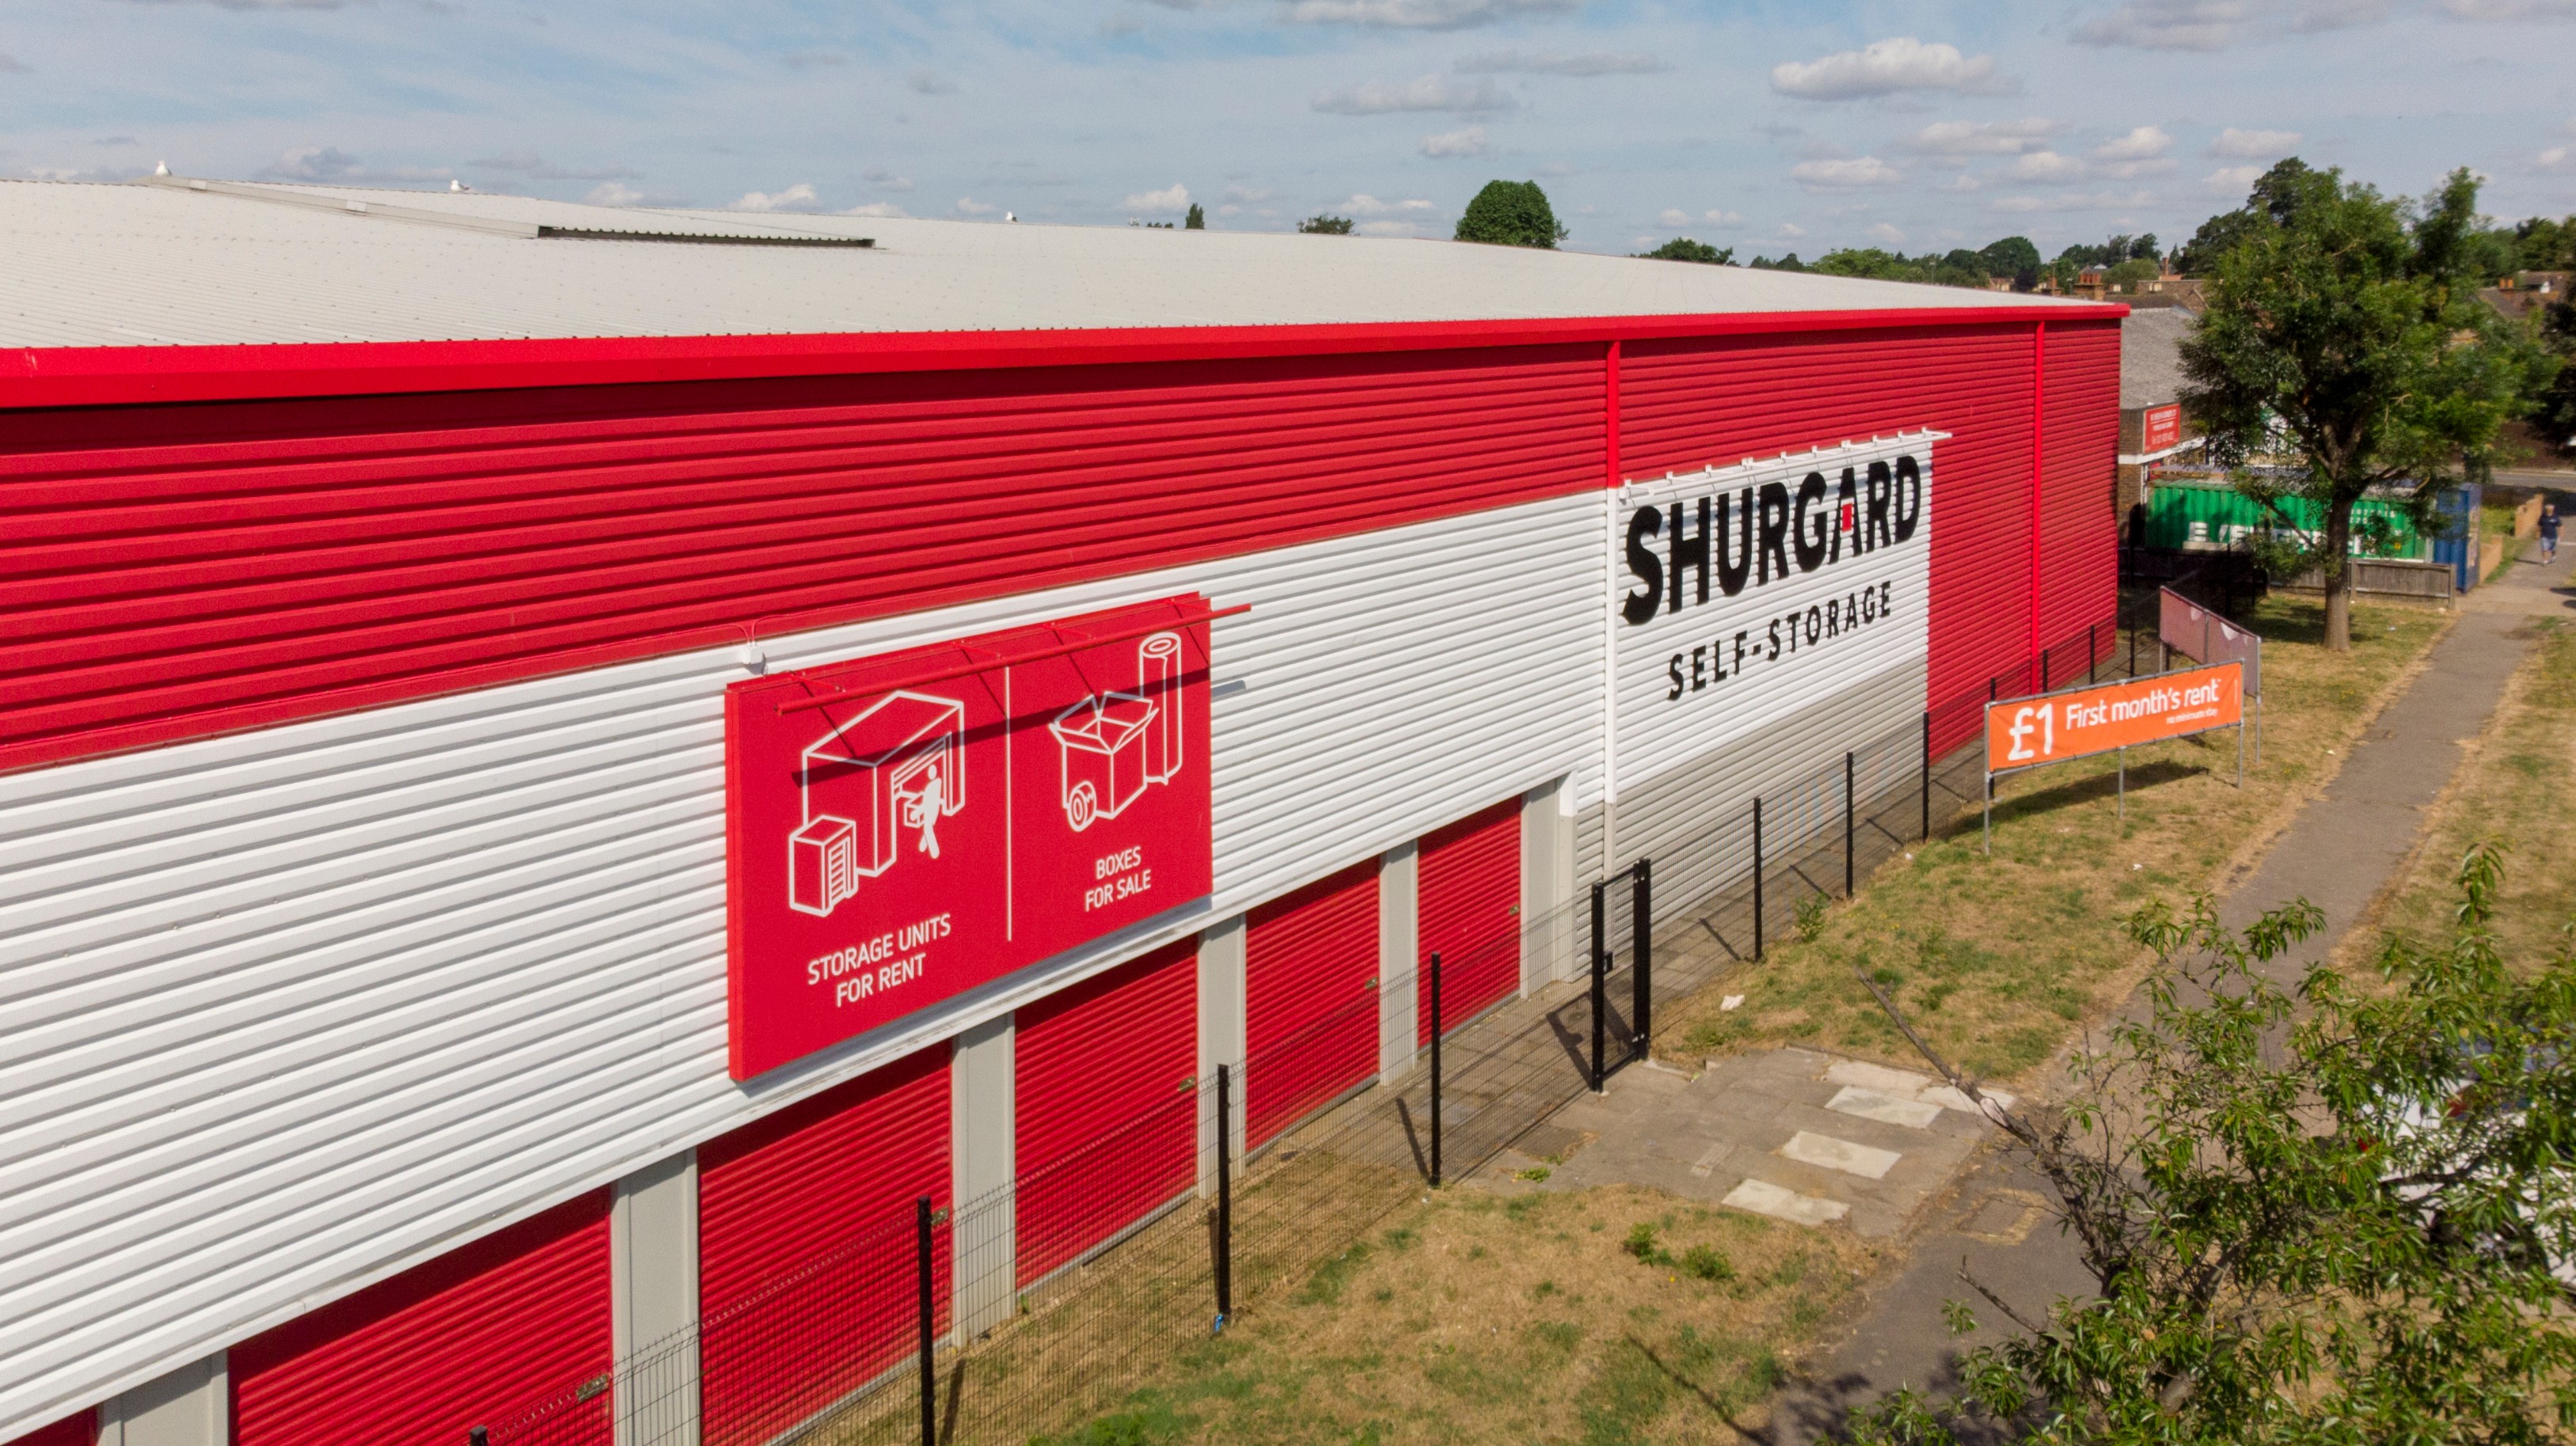 Shurgard Self Storage Harrow Harrow 020 8421 7770